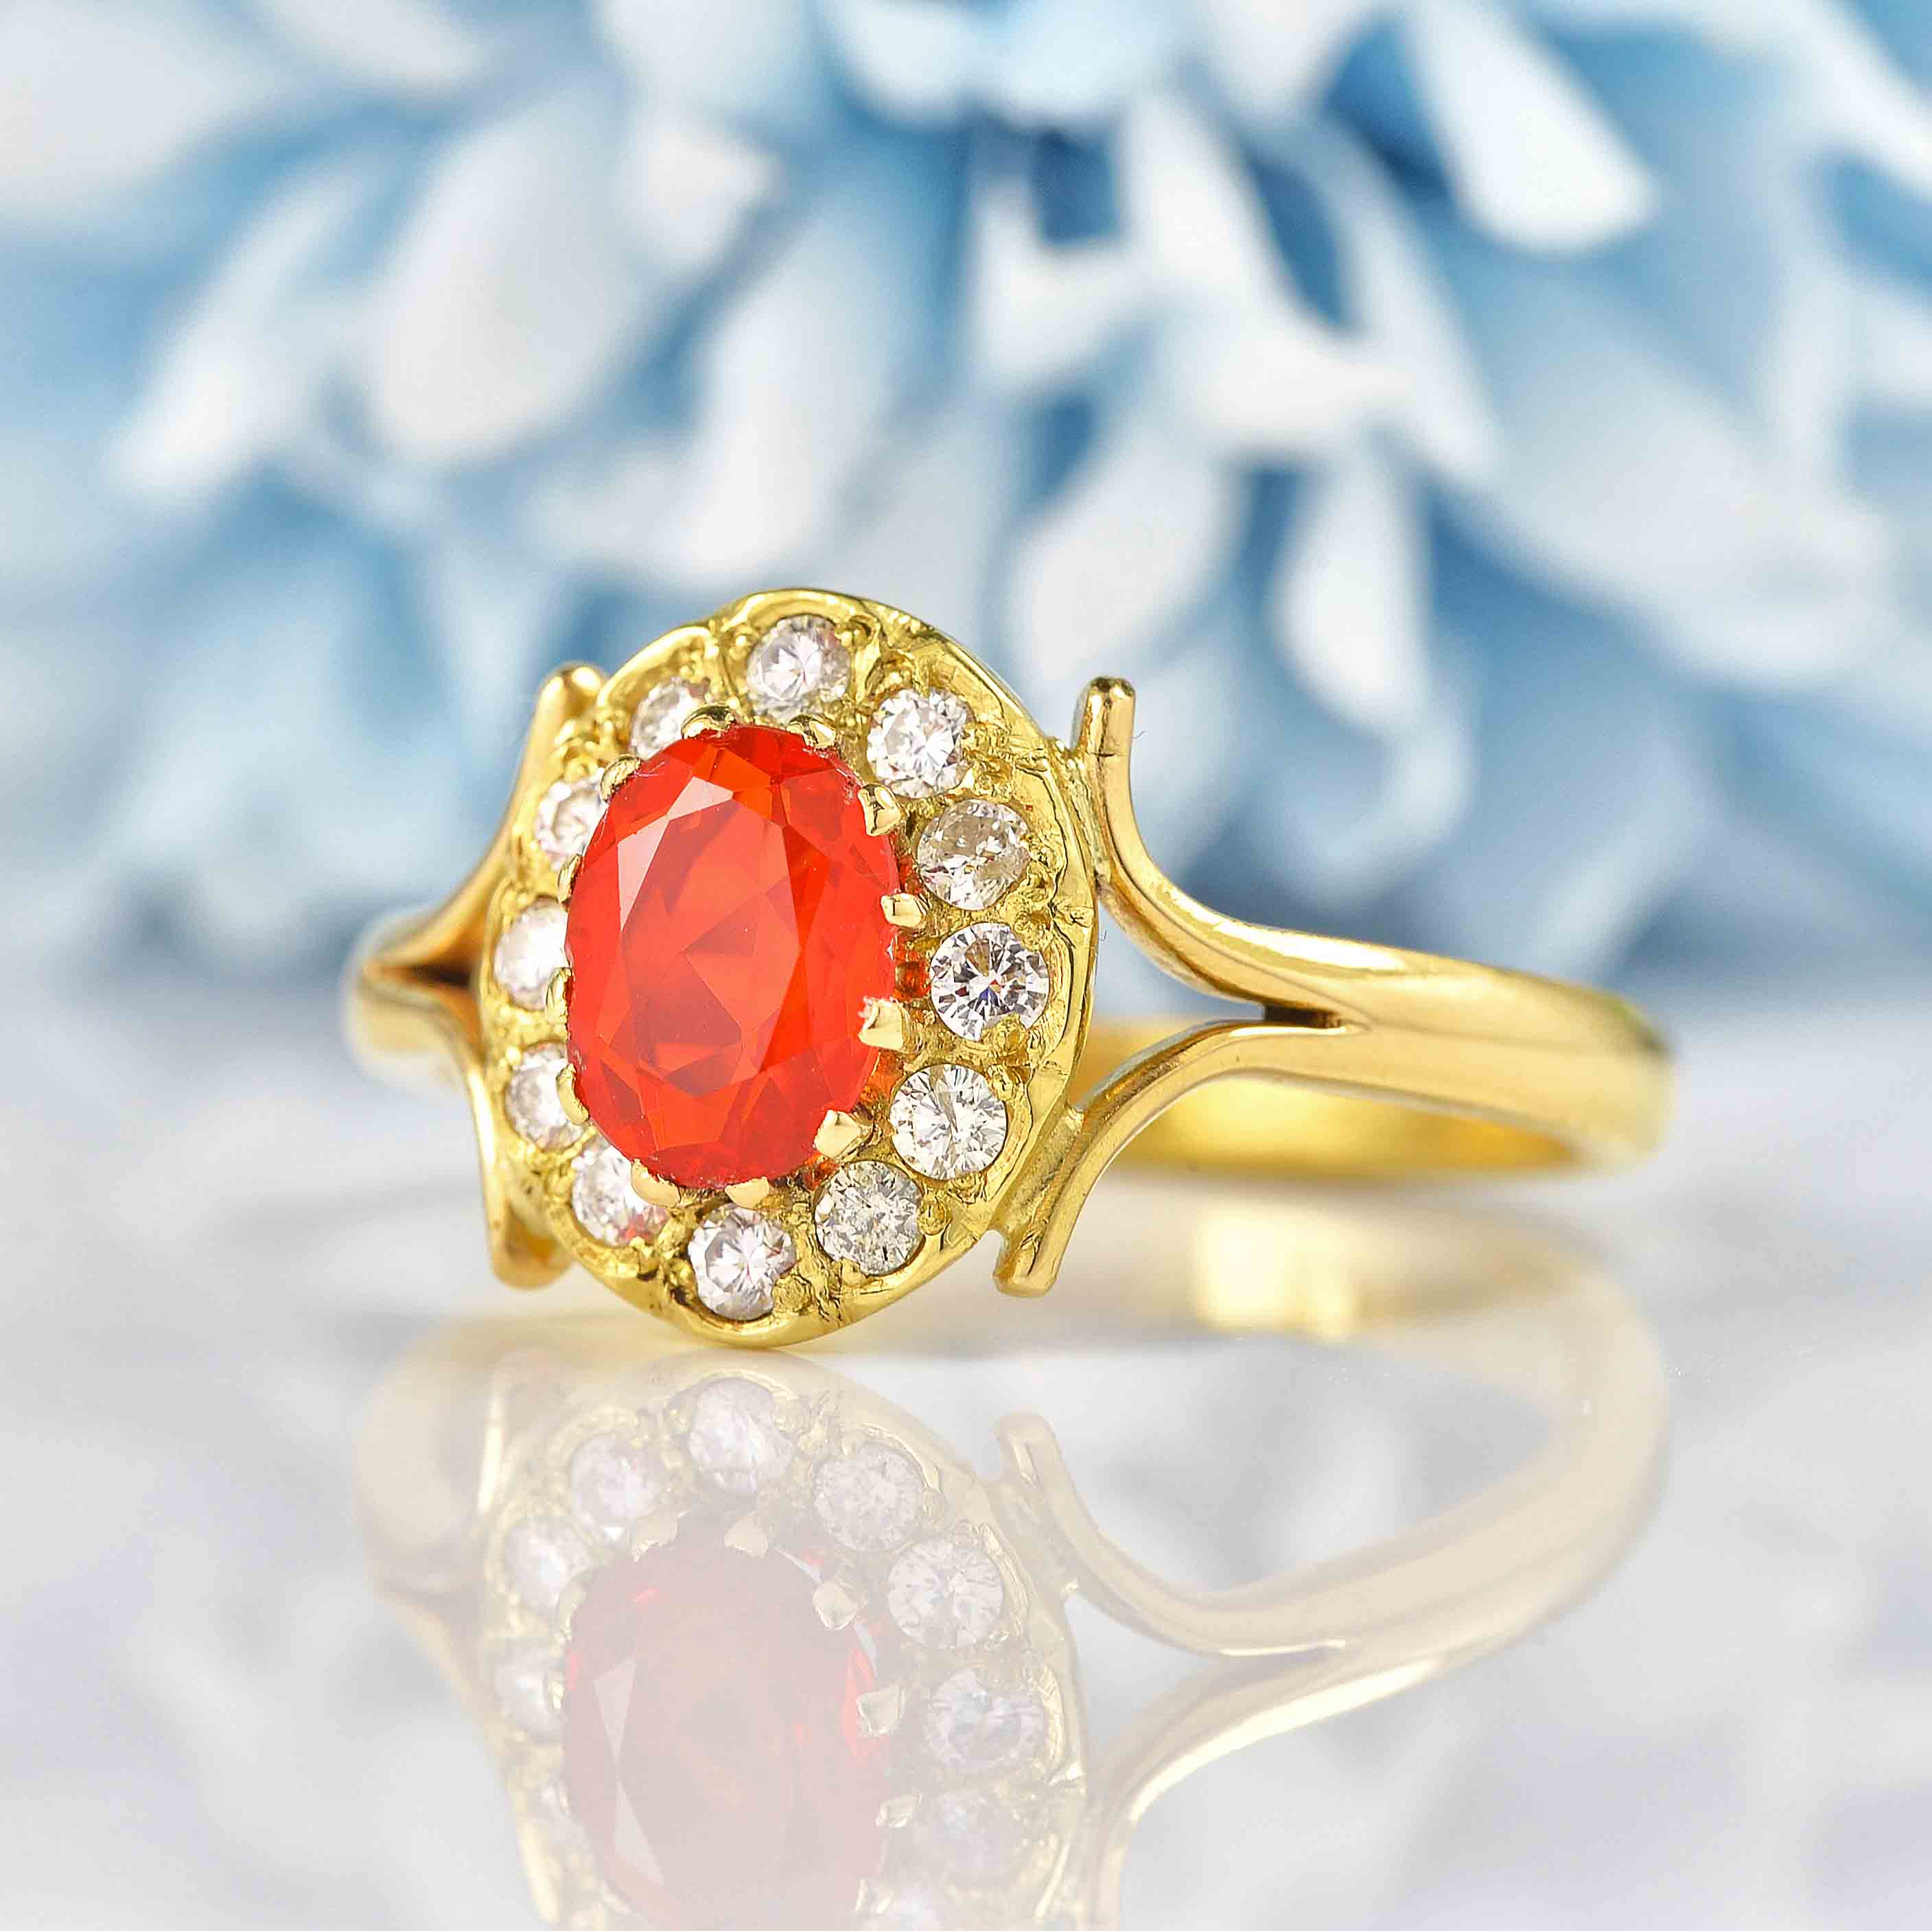 Ellibelle Jewellery Vintage Fire Opal & Diamond Gold Cluster Ring